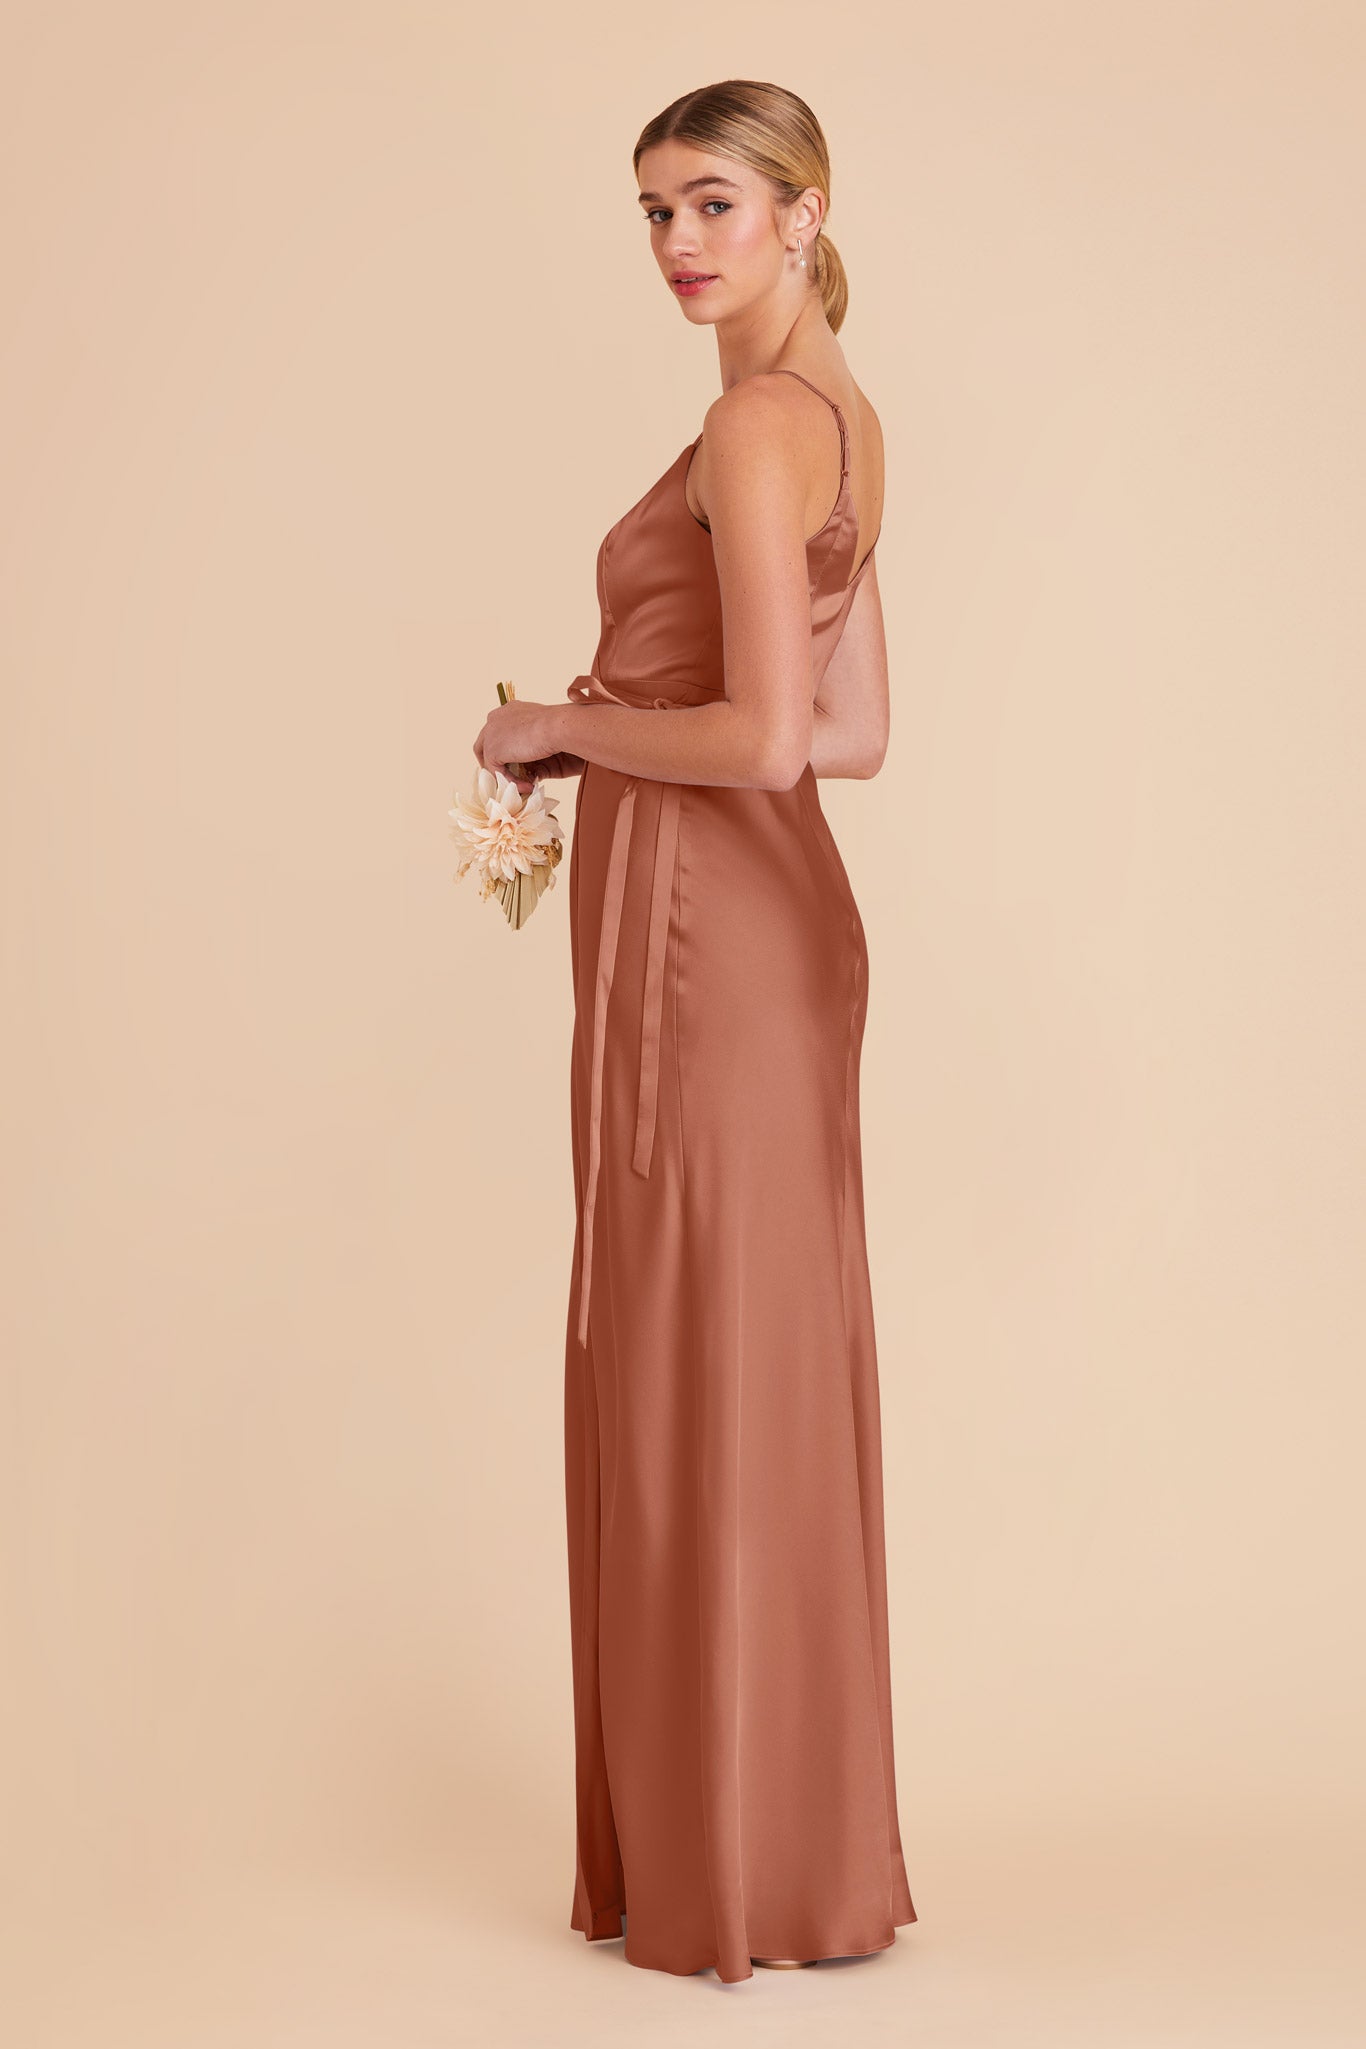 Desert Rose Cindy Matte Satin Dress by Birdy Grey